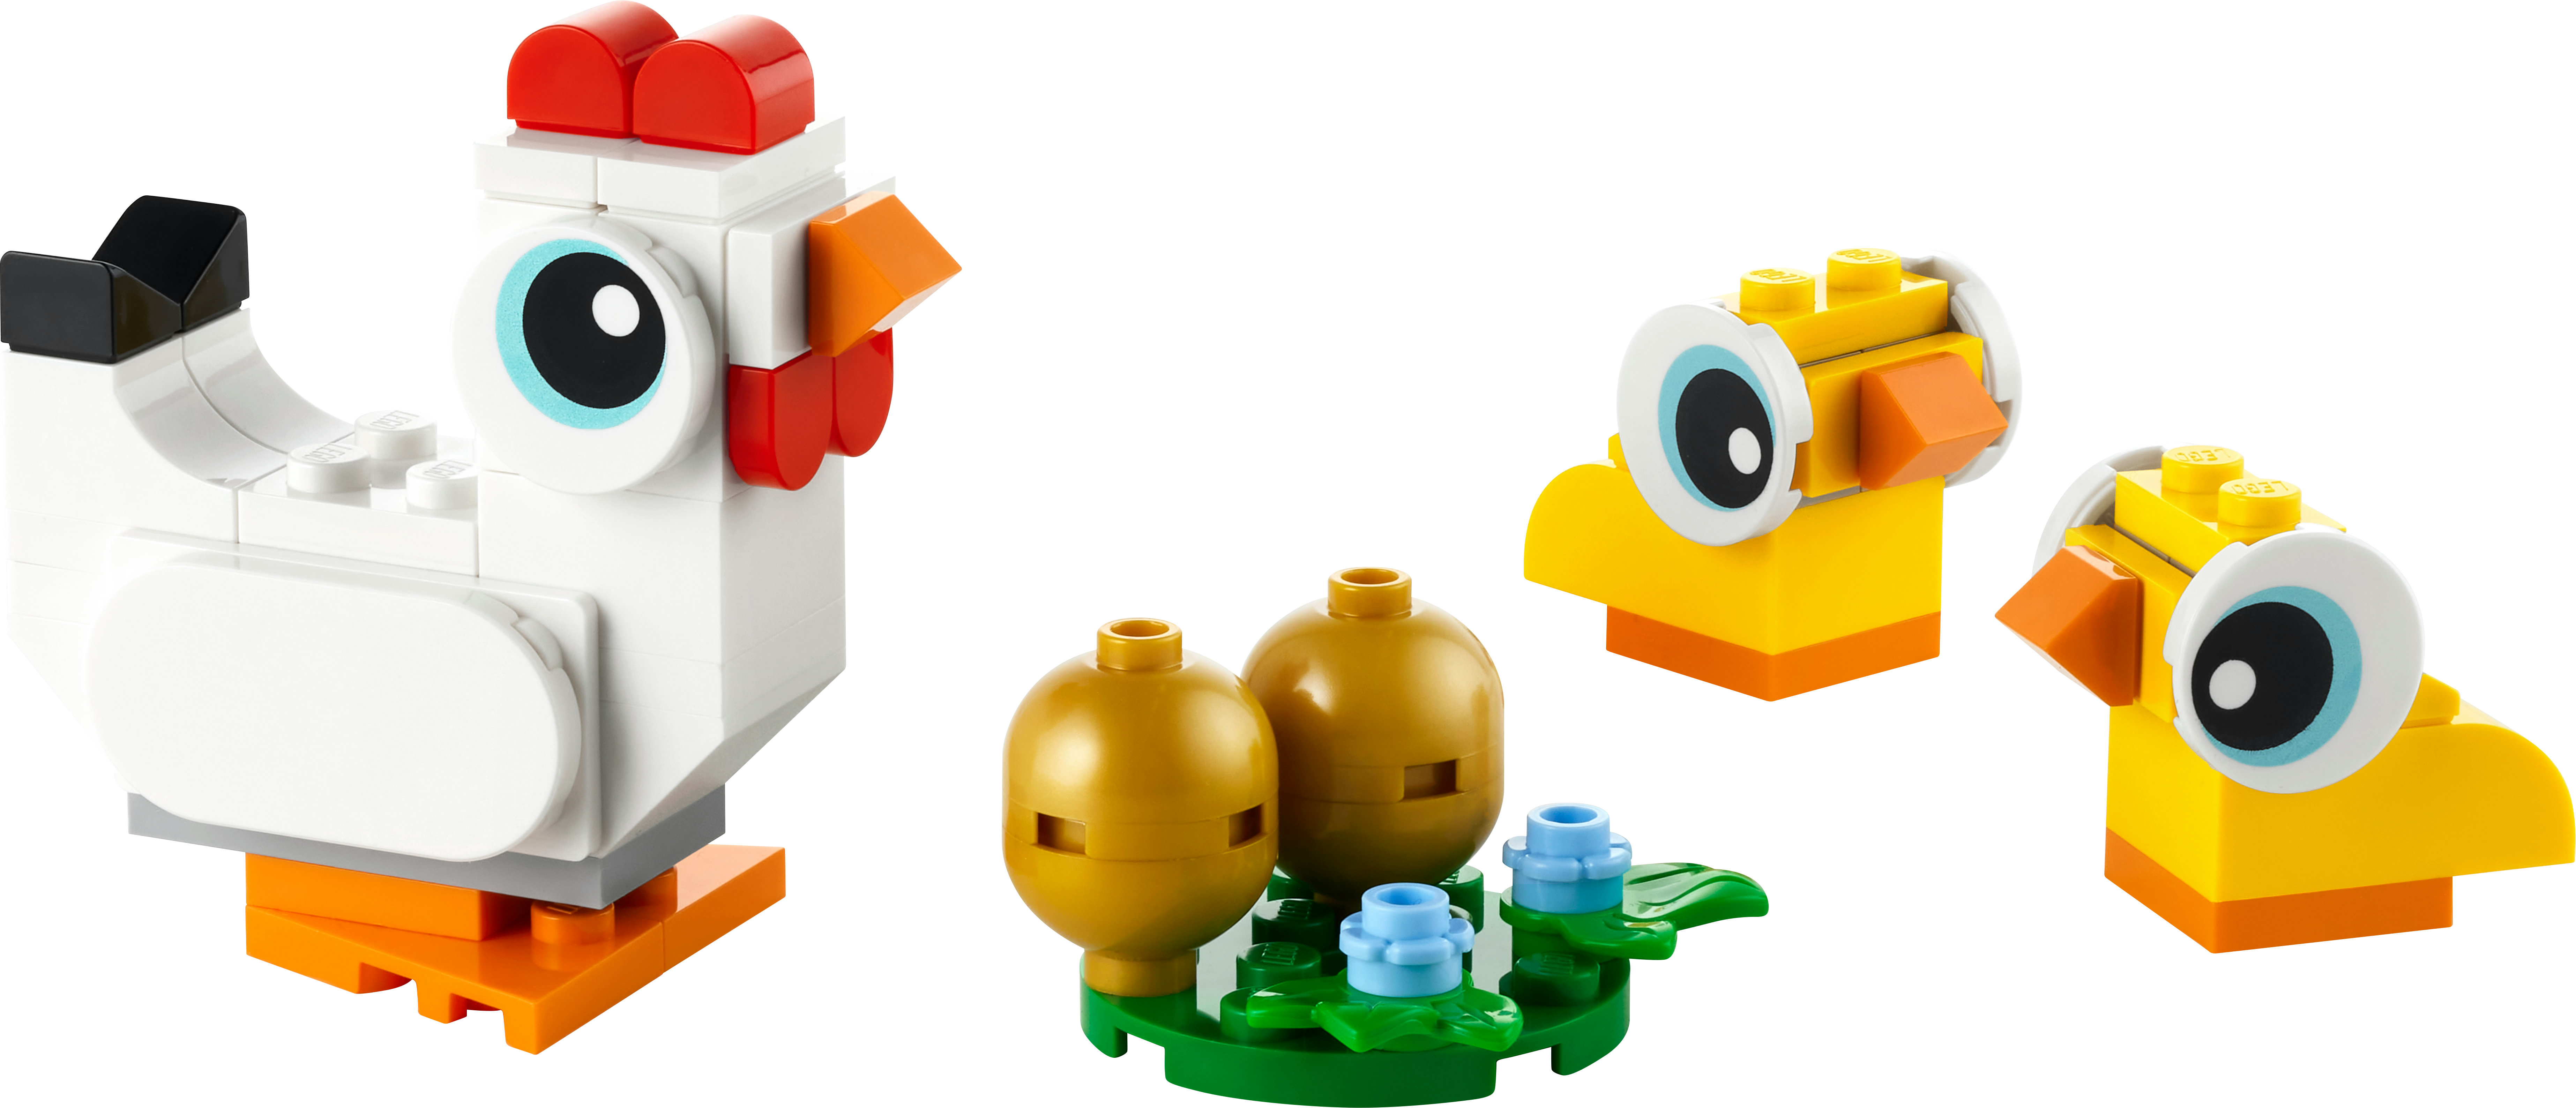 LEGO Mehrfarbig Creator 30643 Oster-Hühner Bausatz,